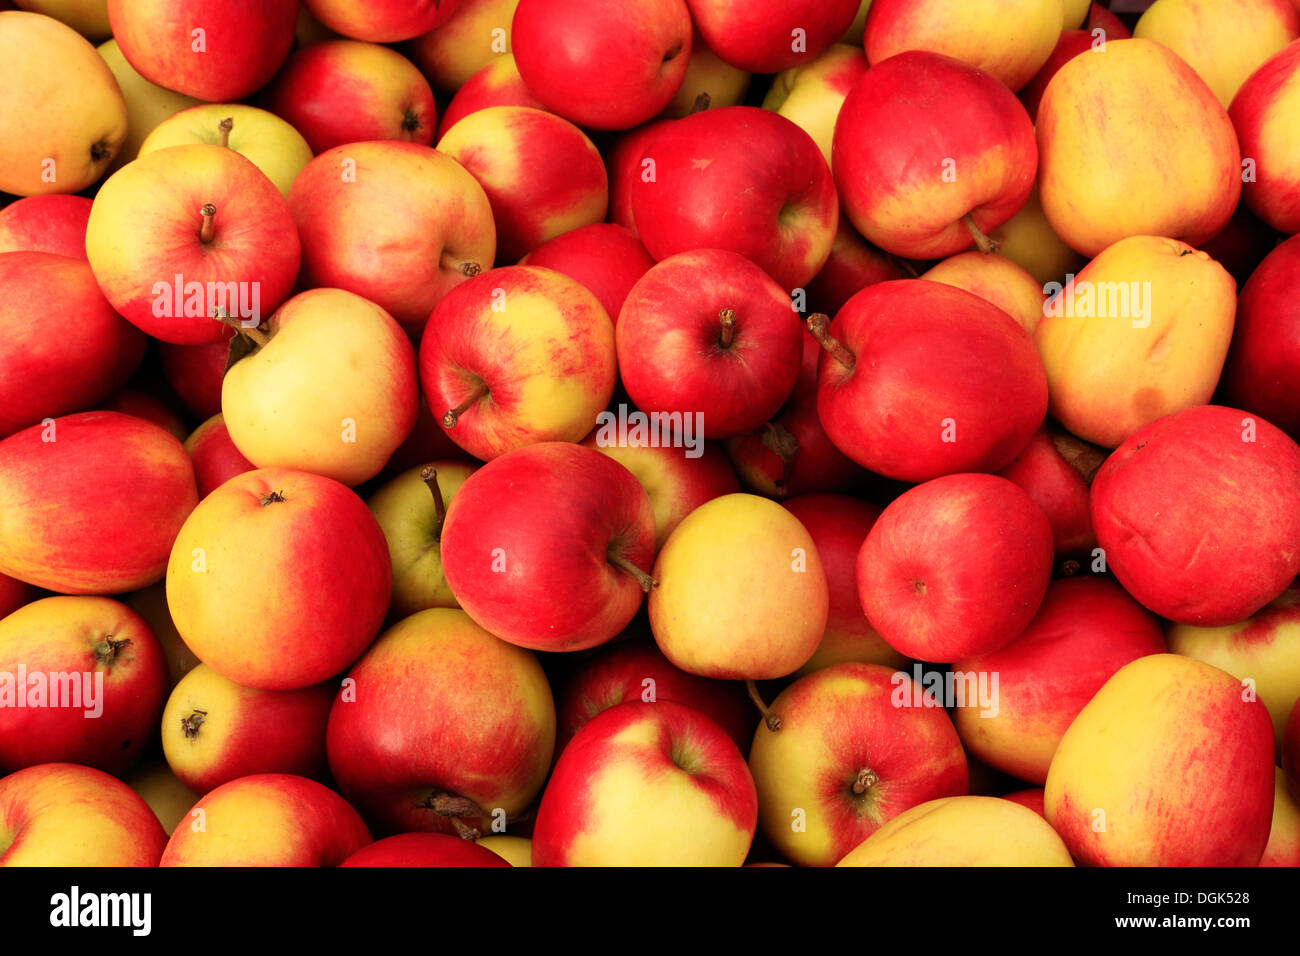 Apple 'Katy', syn. 'Katya', malus domestica, apples variety varieties in farm shop display Stock Photo